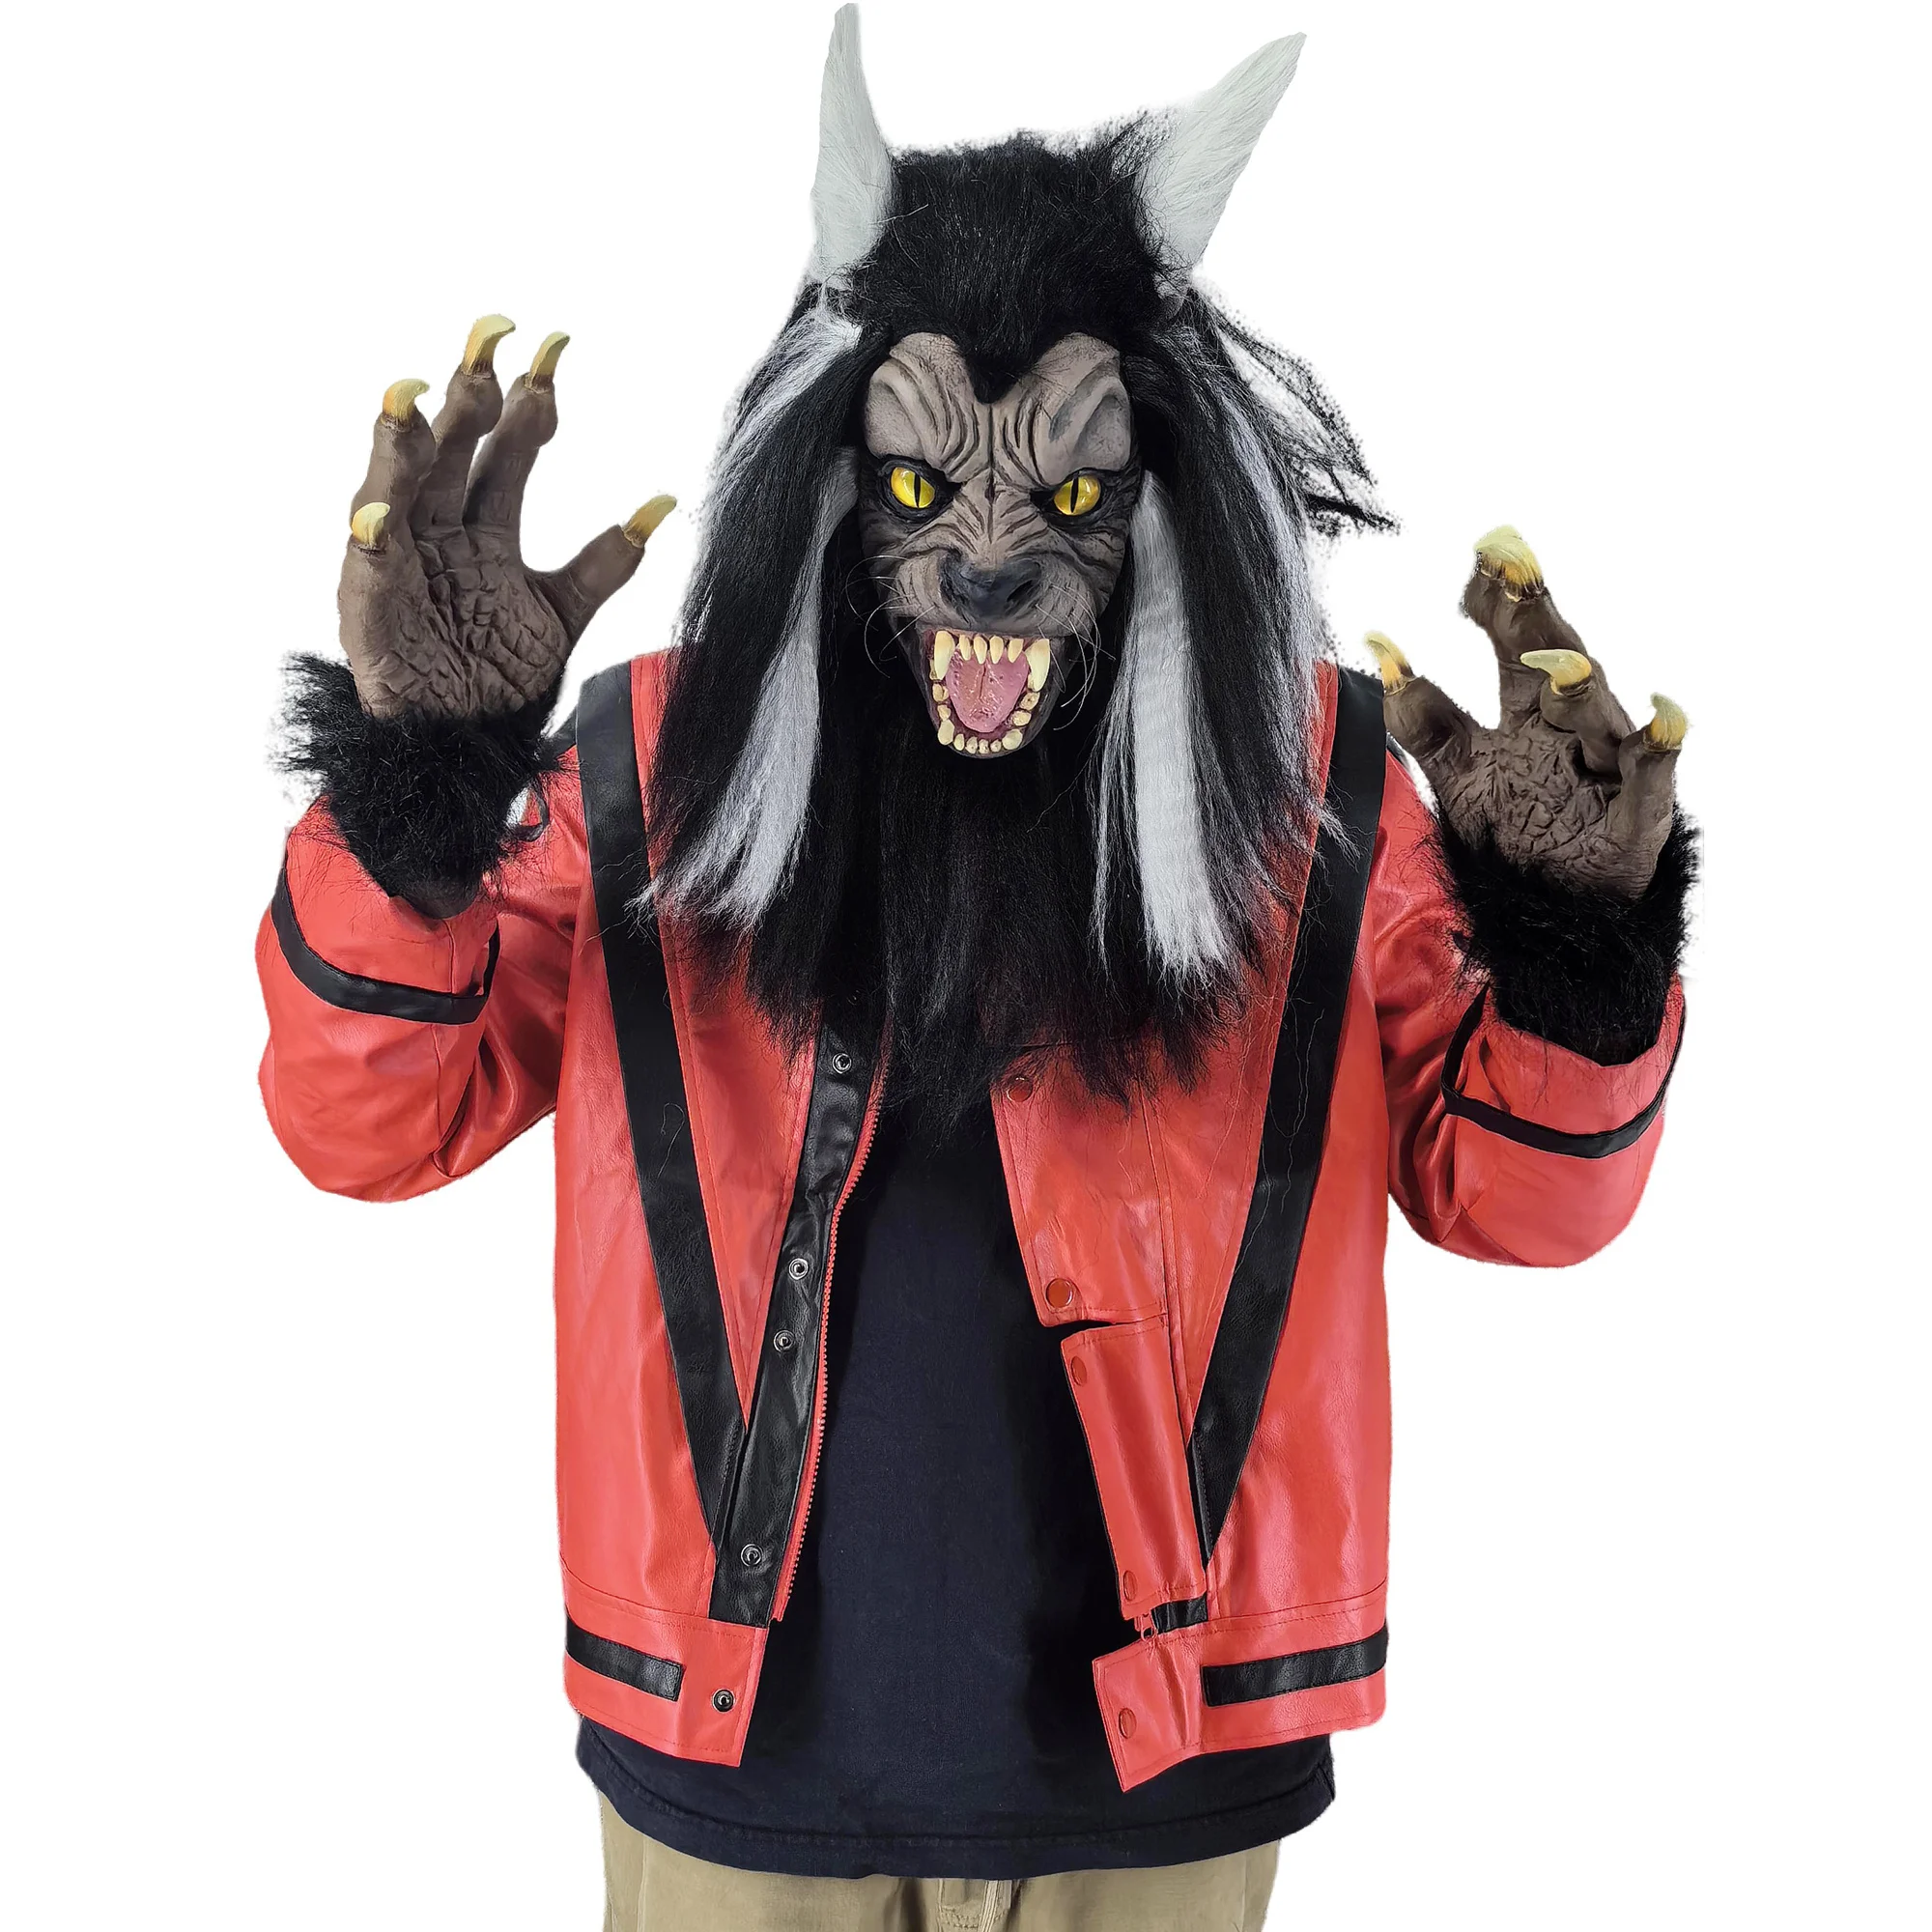 Rare MJ Michael Jackson Werewolf Bloodcurdling Mask in Thriller Vocal Concert for Halloween Impersonator